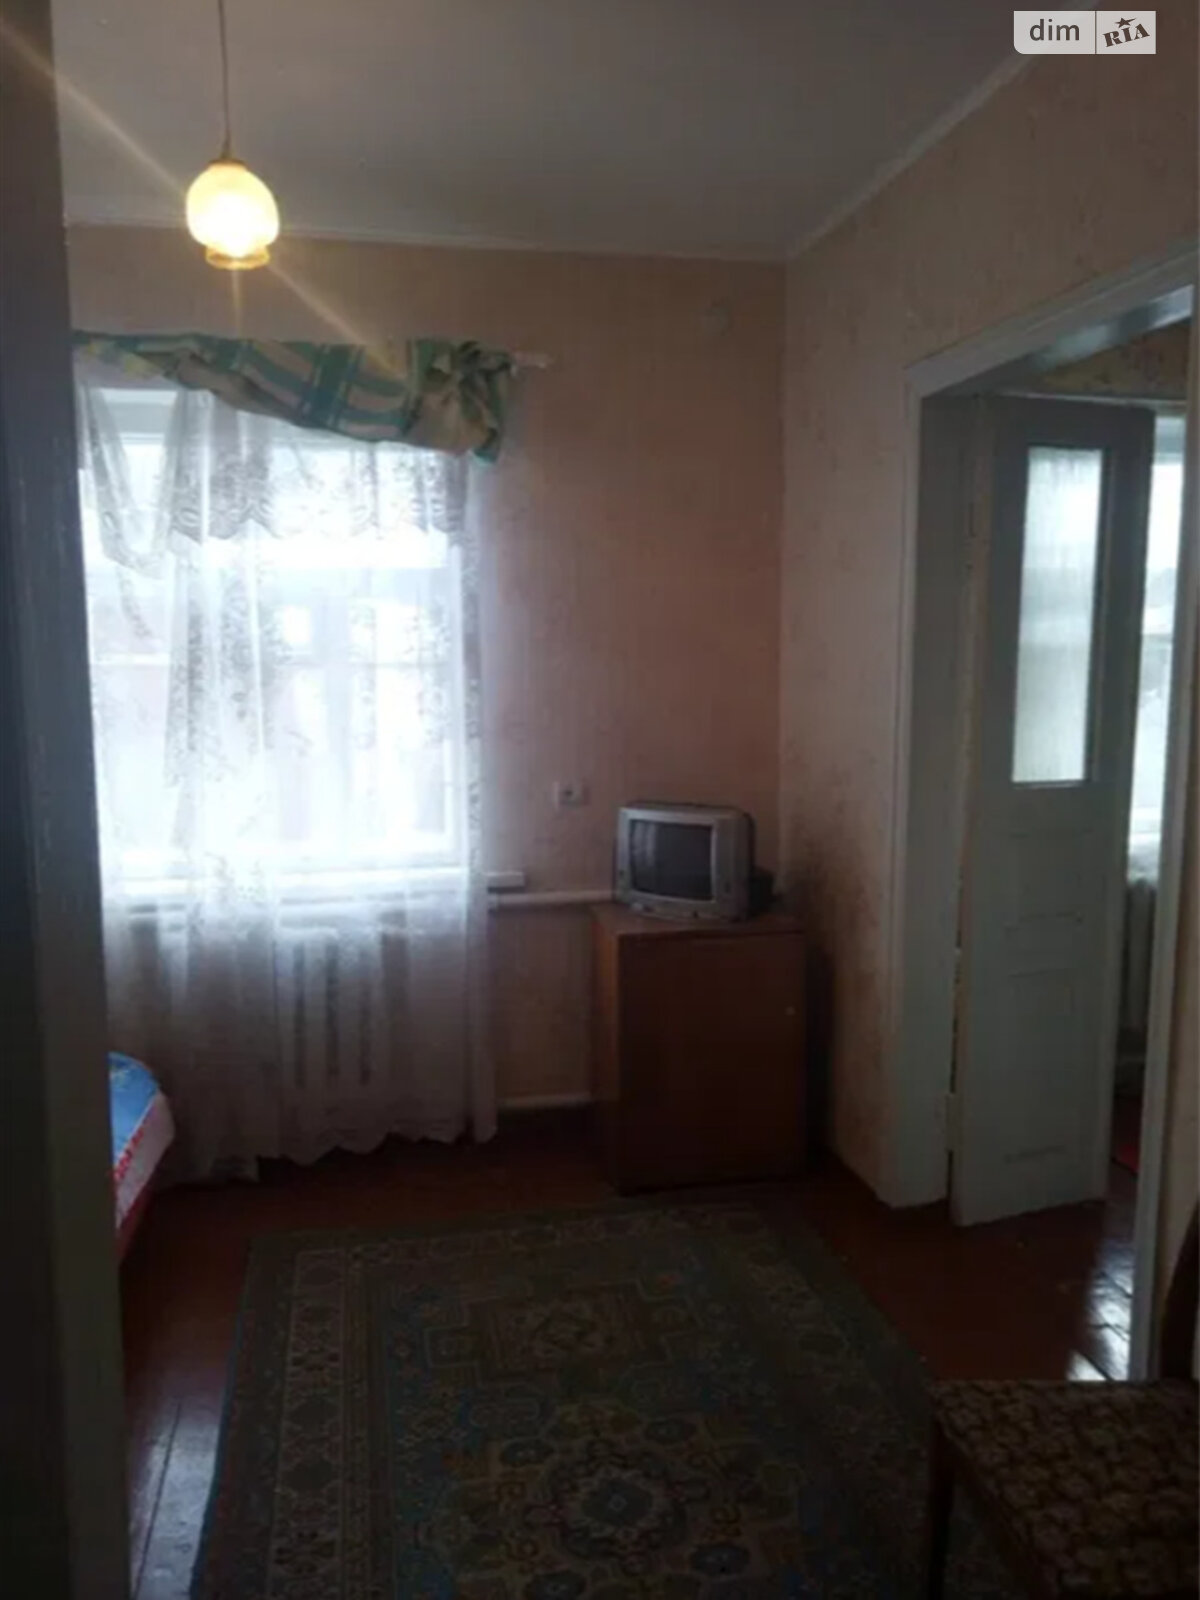 Продажа части дома в Харькове, улица Глазкова, 3 комнаты фото 1